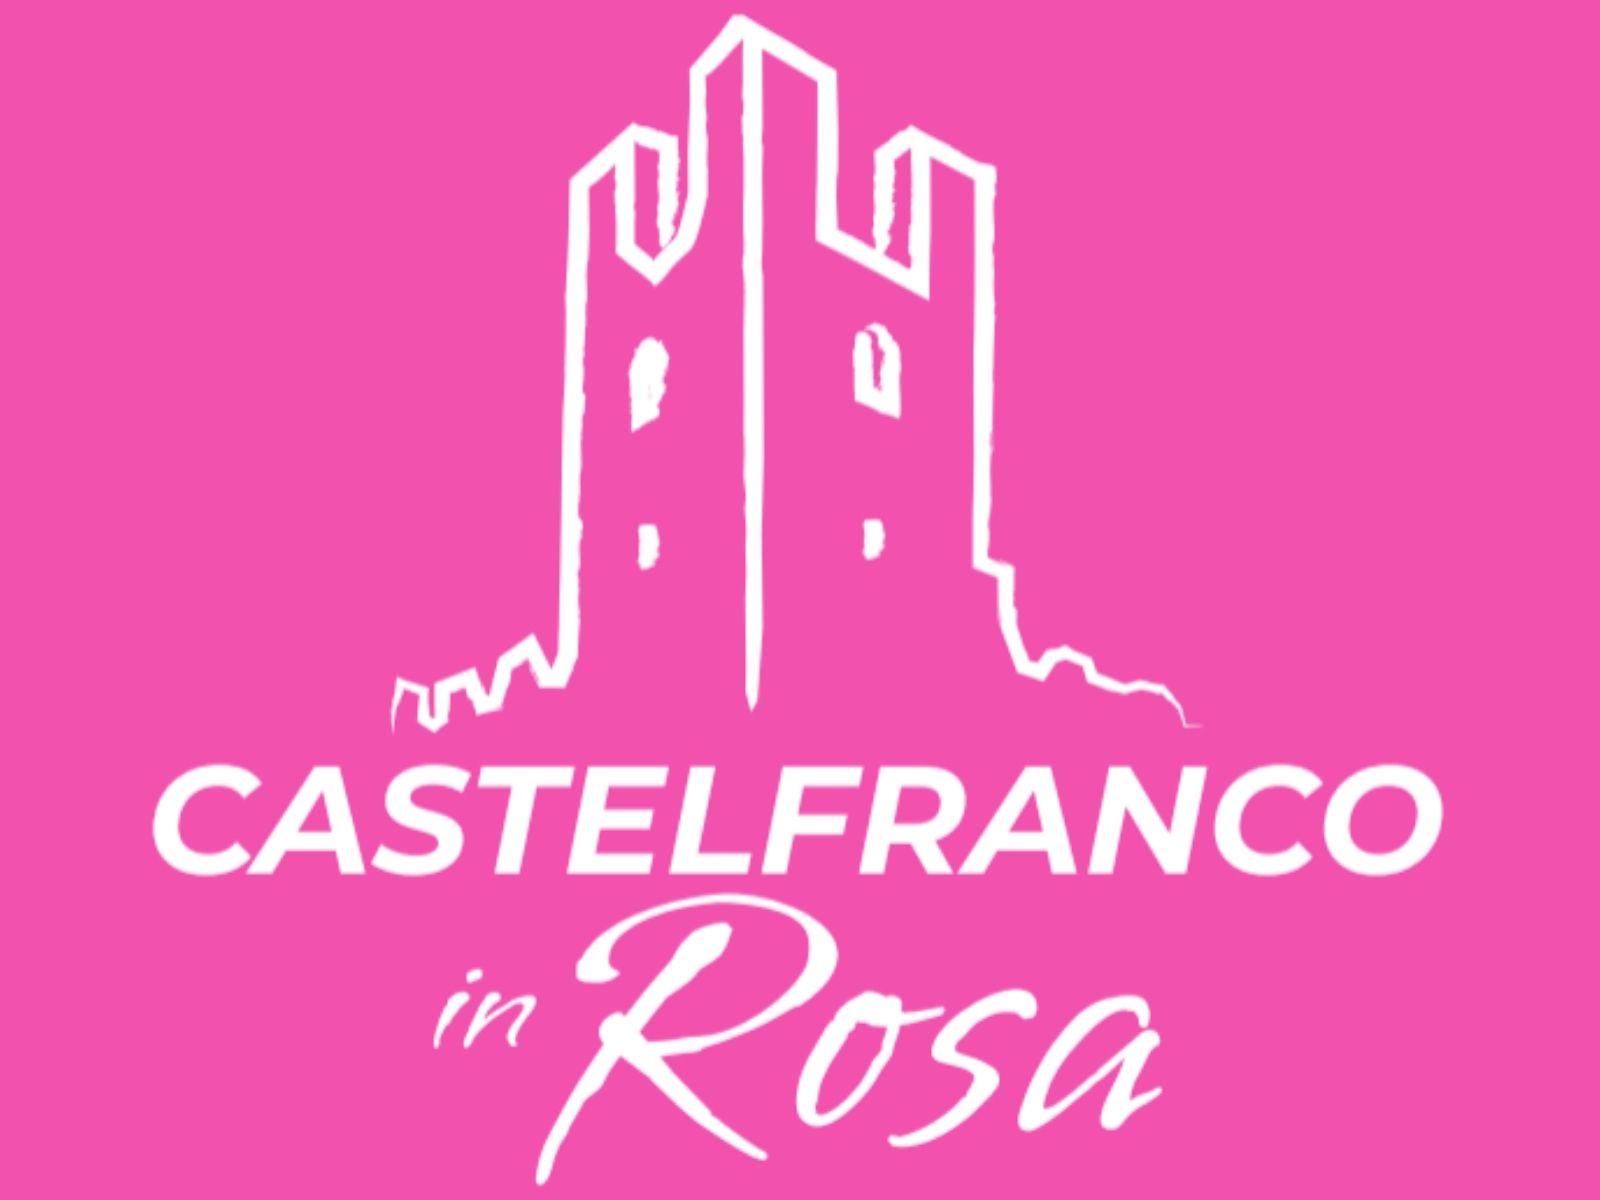 Castelfranco in rosa